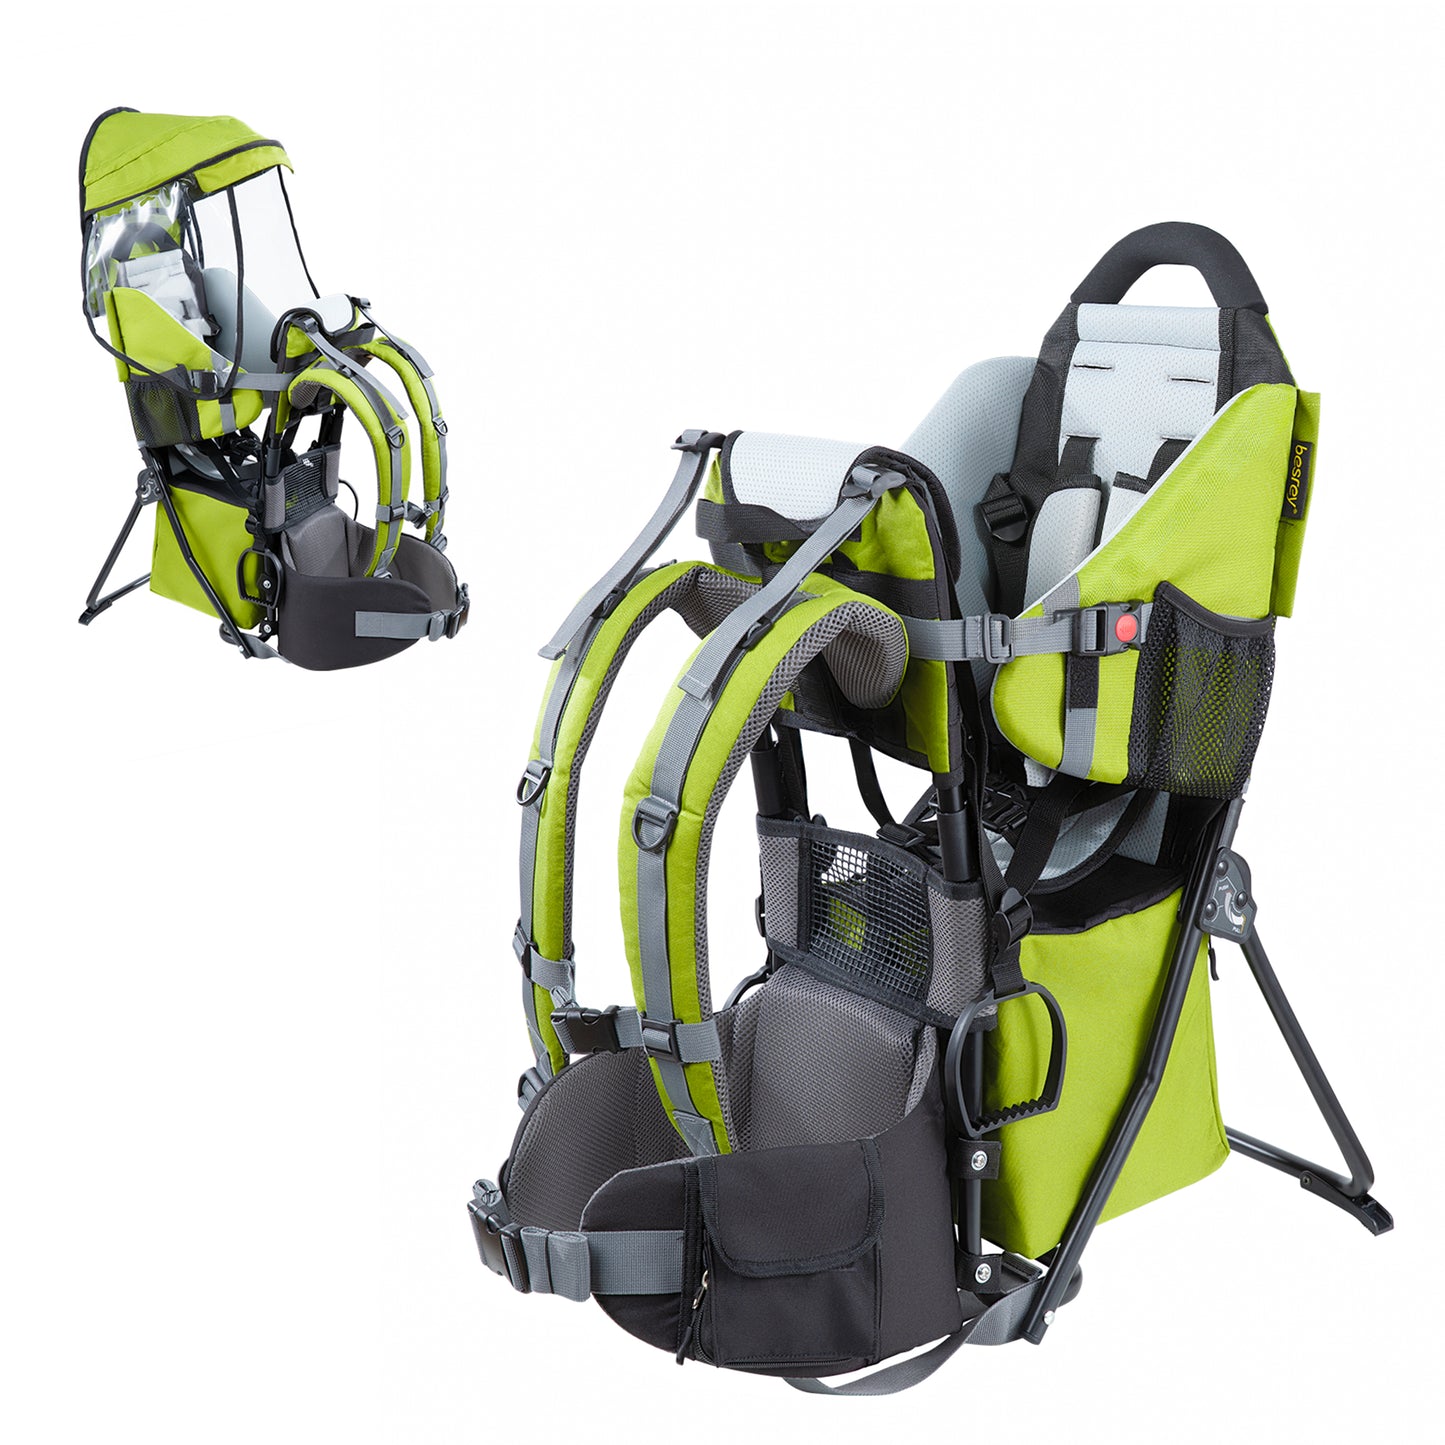 Besrey Baby Backpack Carrier con sedile di sicurezza a 3 altezze